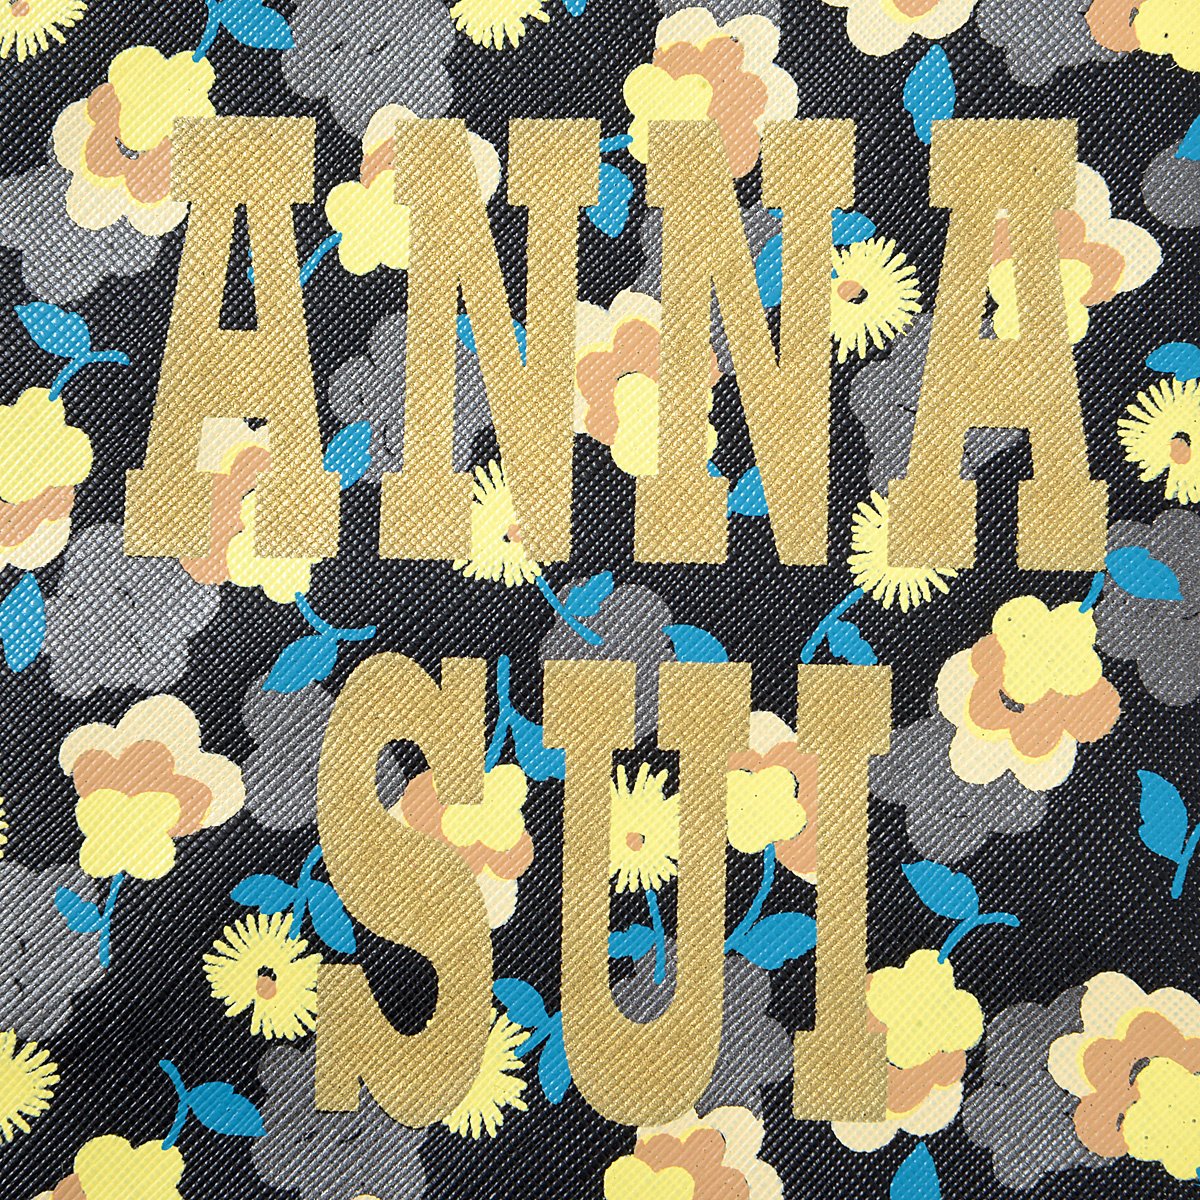 Anna Sui 20th Anniversary! Anna's Amazing Collection